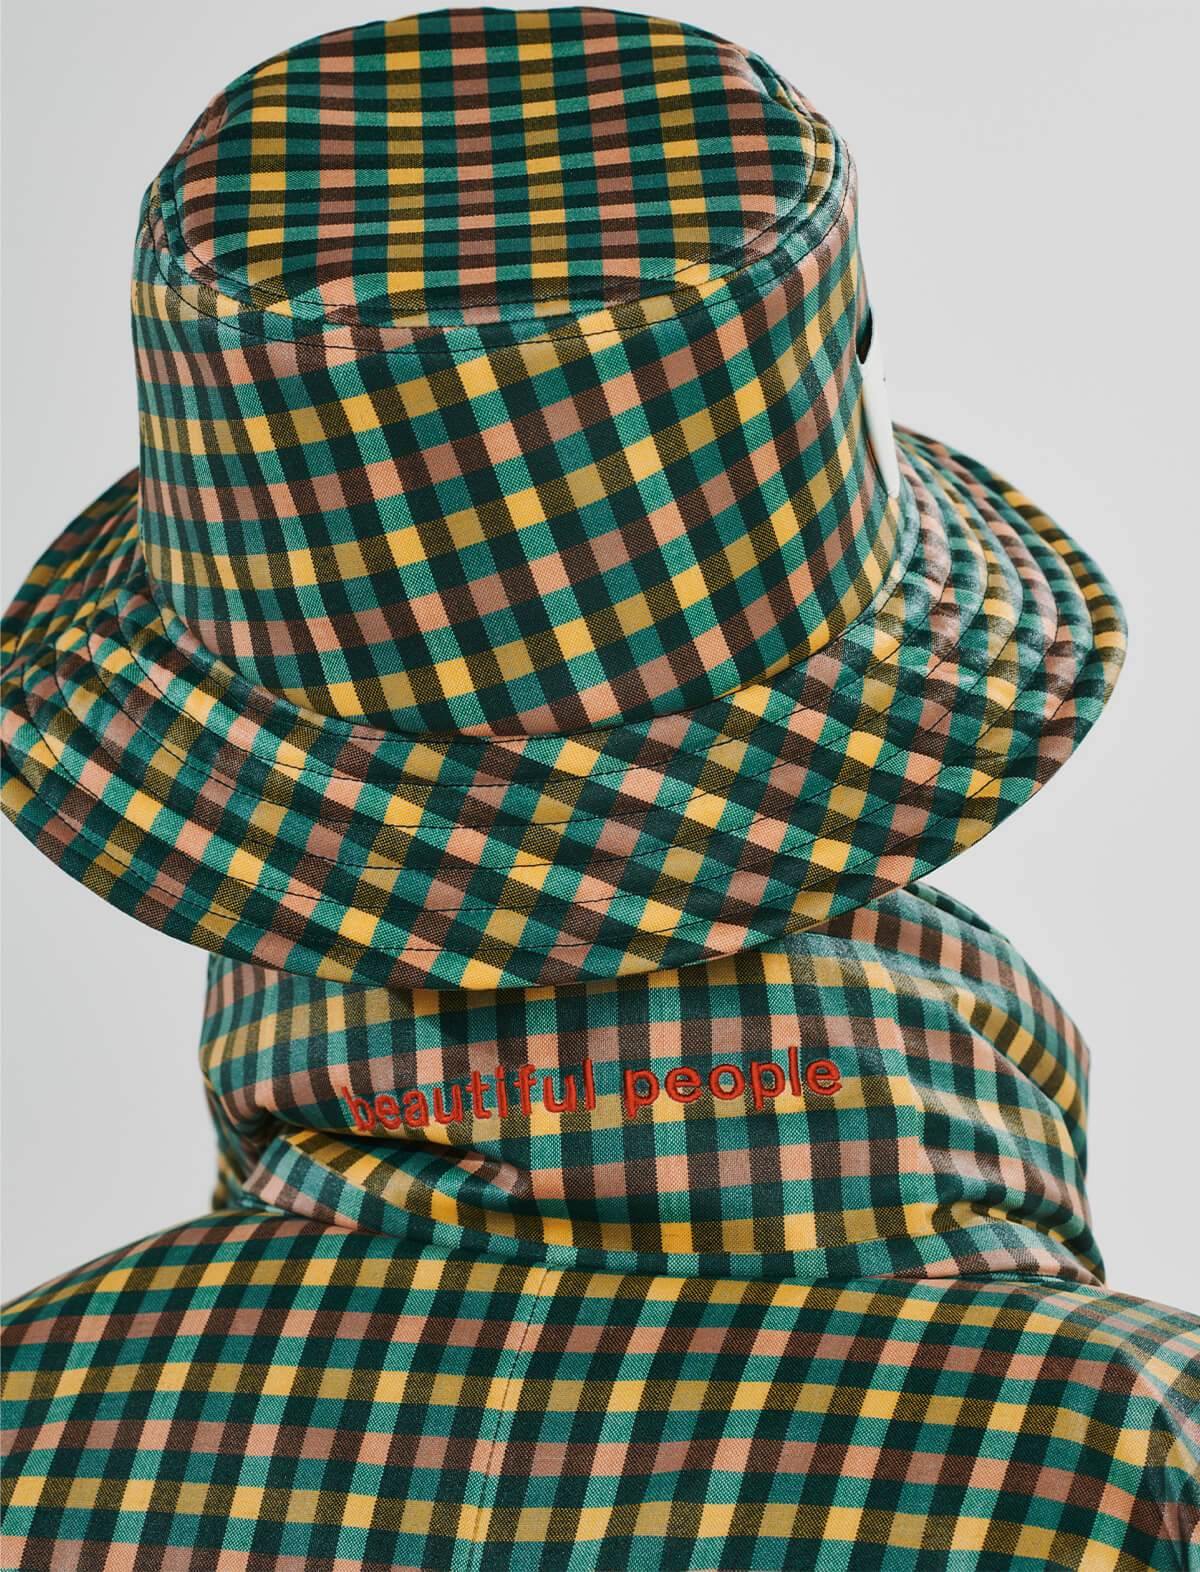 BEAUTIFUL PEOPLE Bucket Hat in Gingham Print | CLOSET Singapore